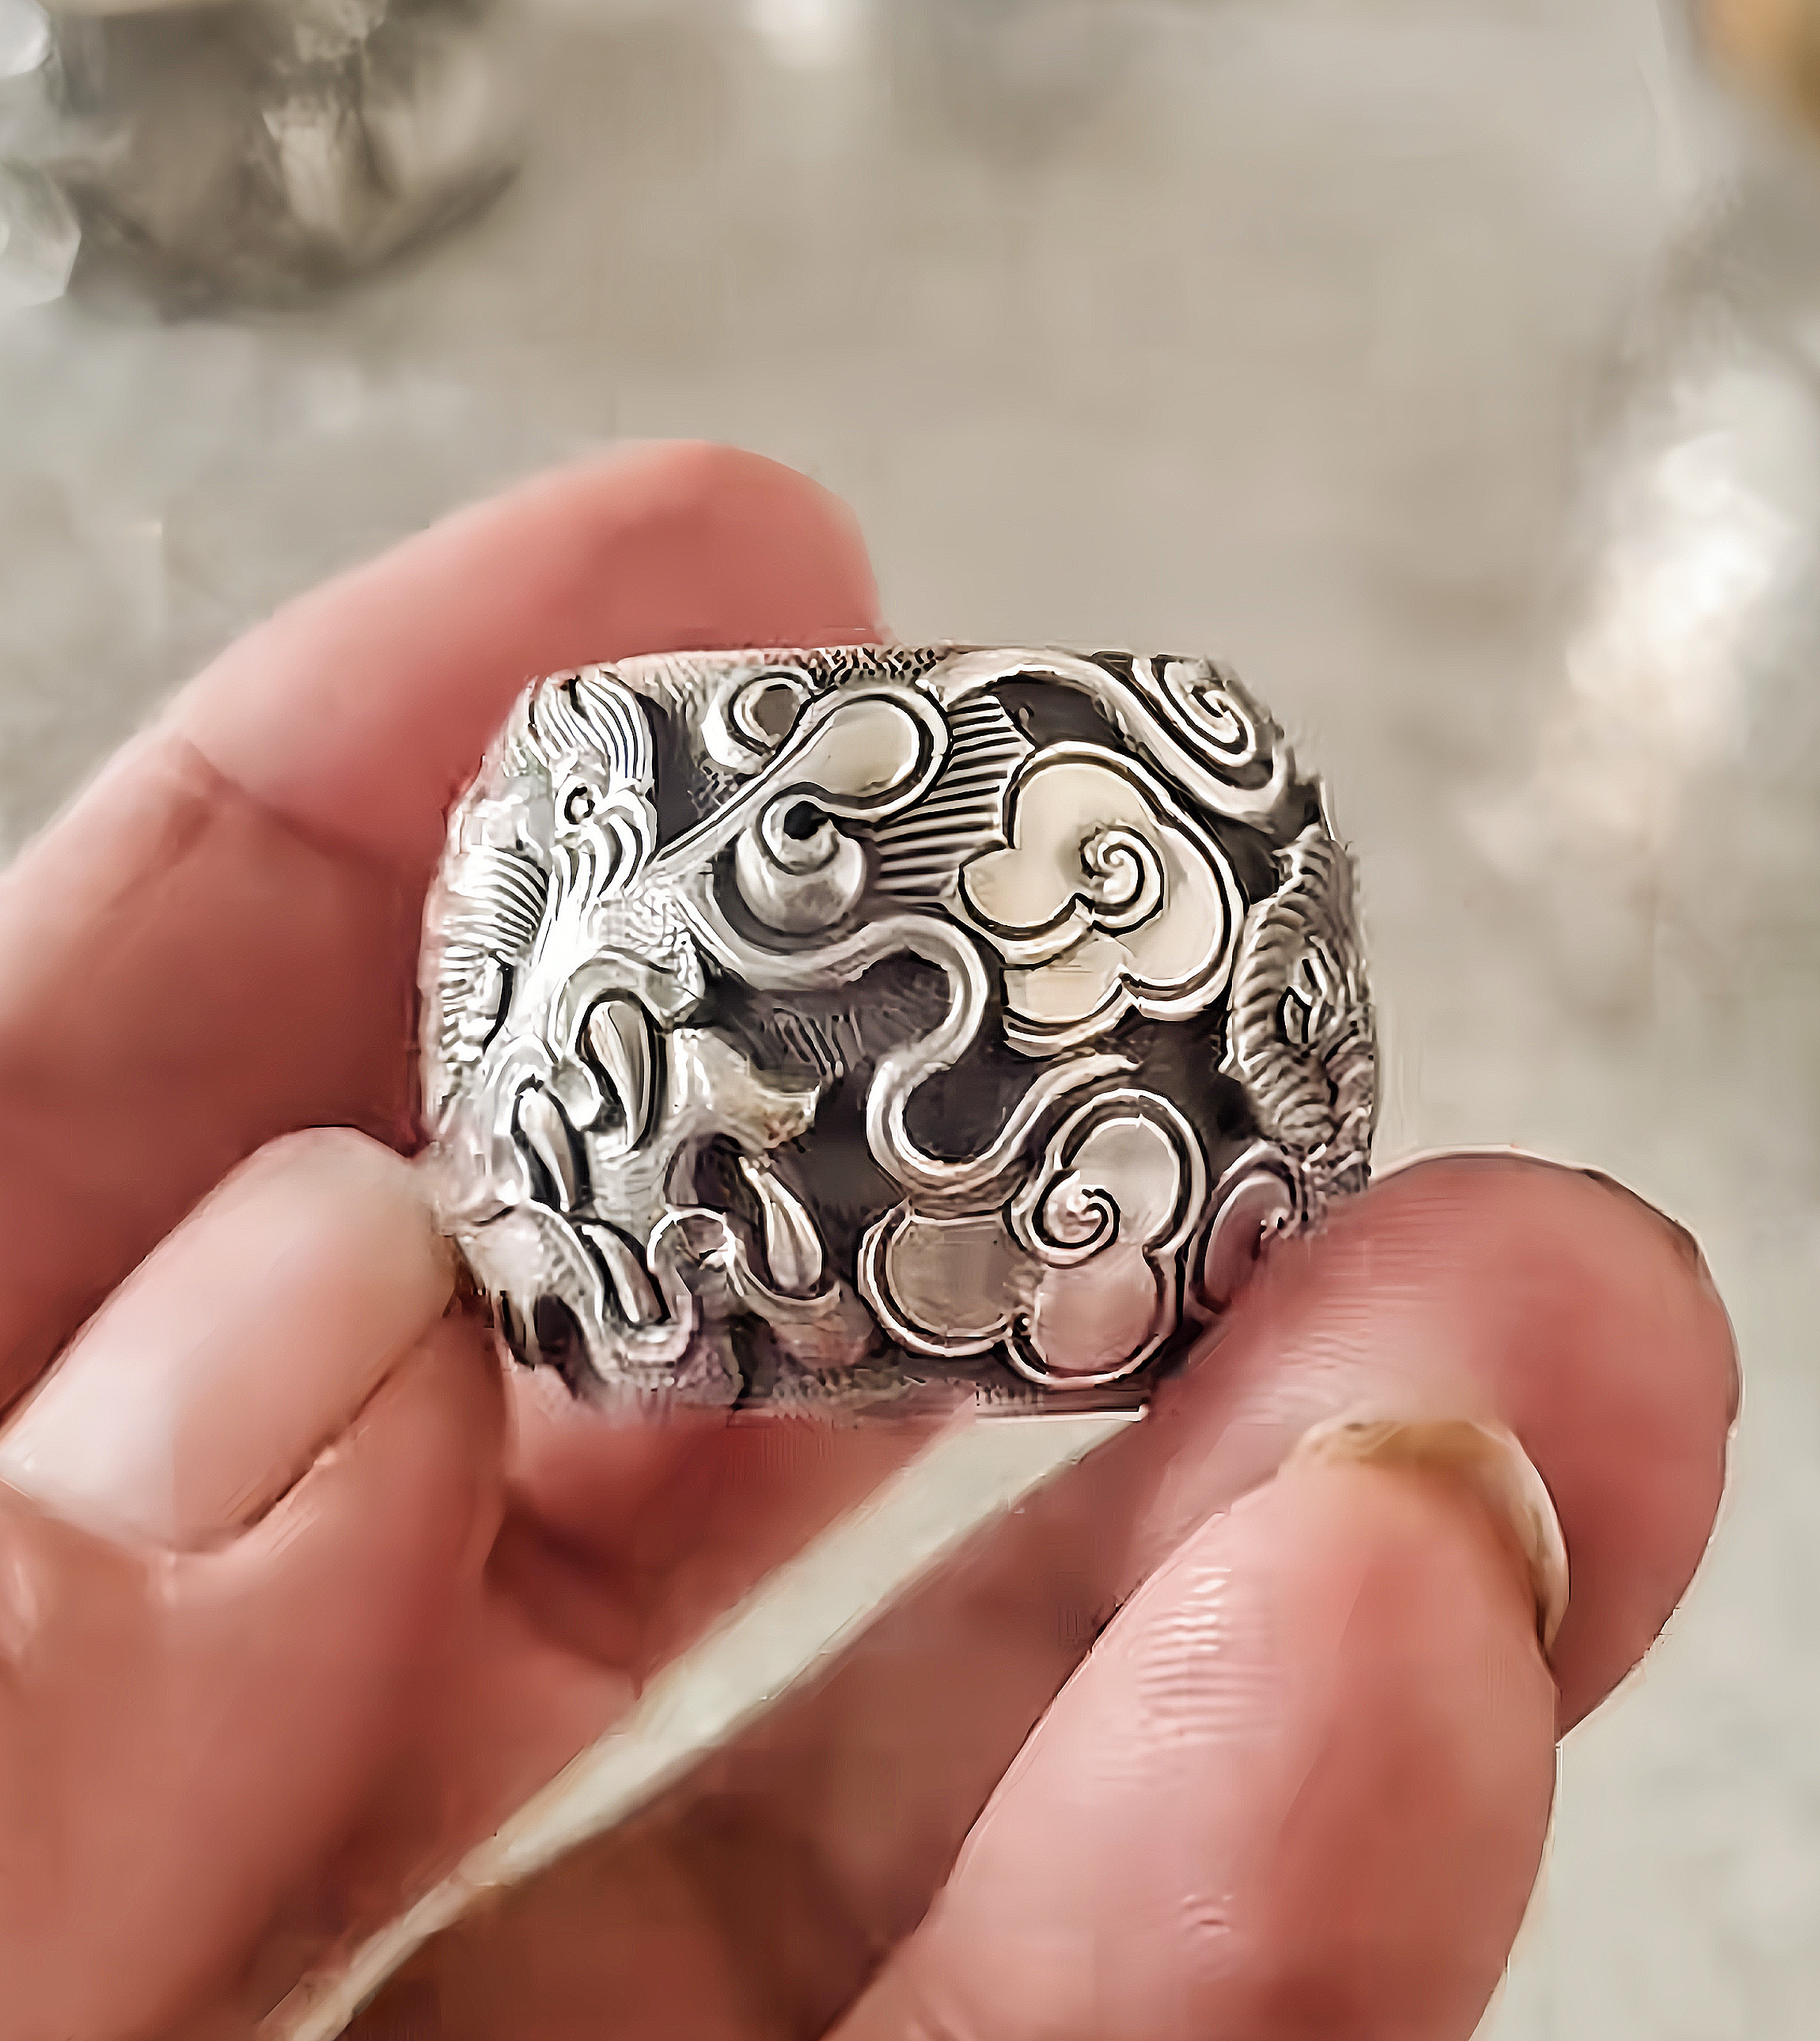 Large Dragon Silver Ring (Item No. R0136)